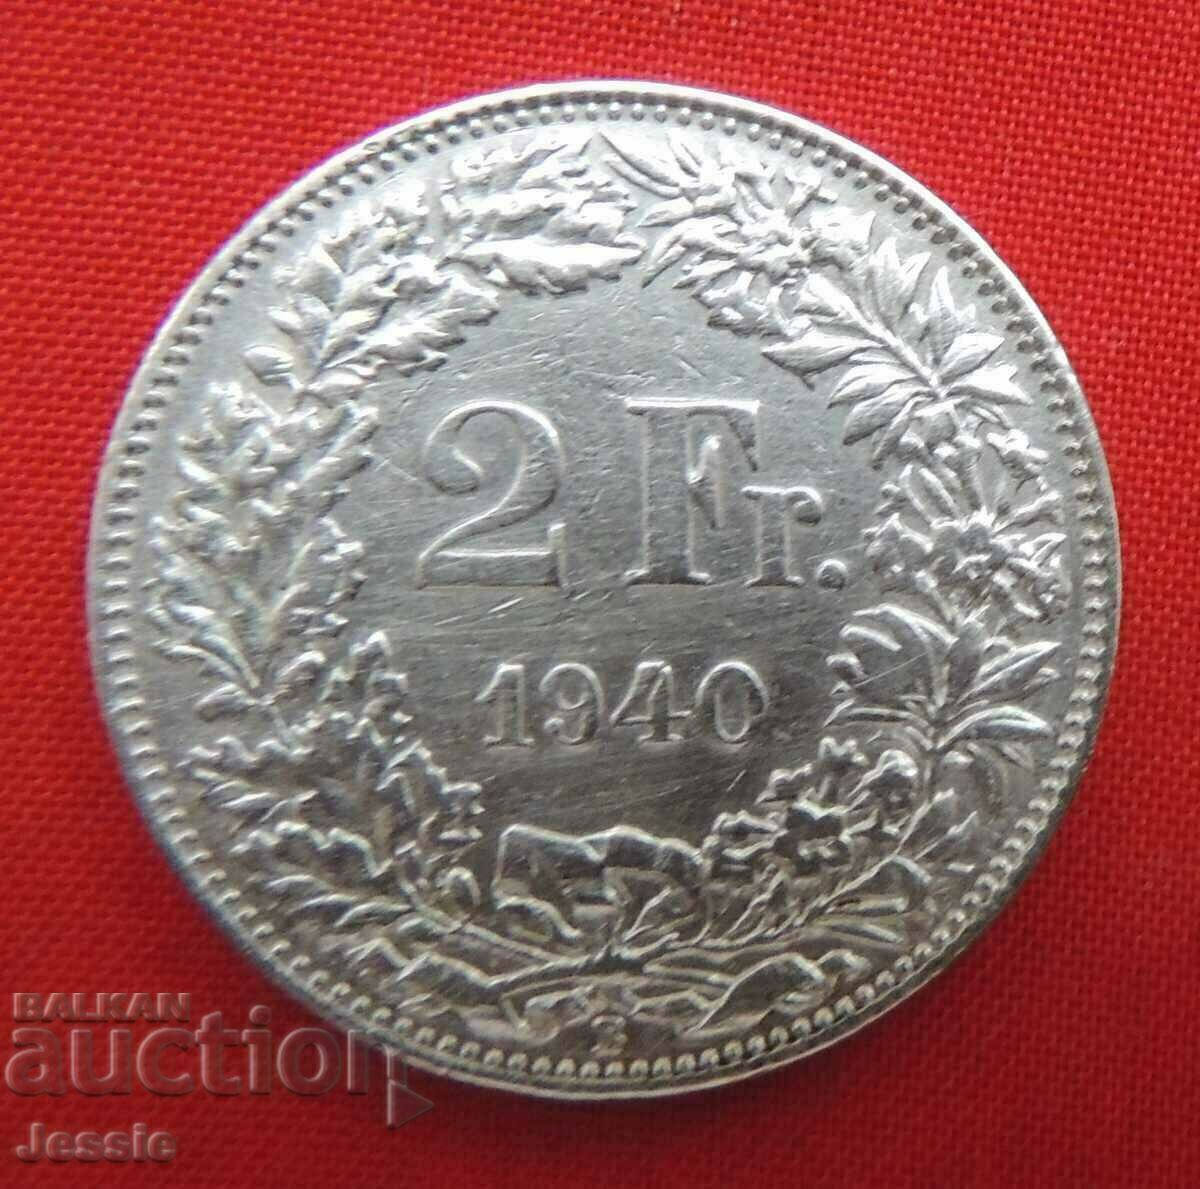 2 Francs 1940 B Switzerland Silver